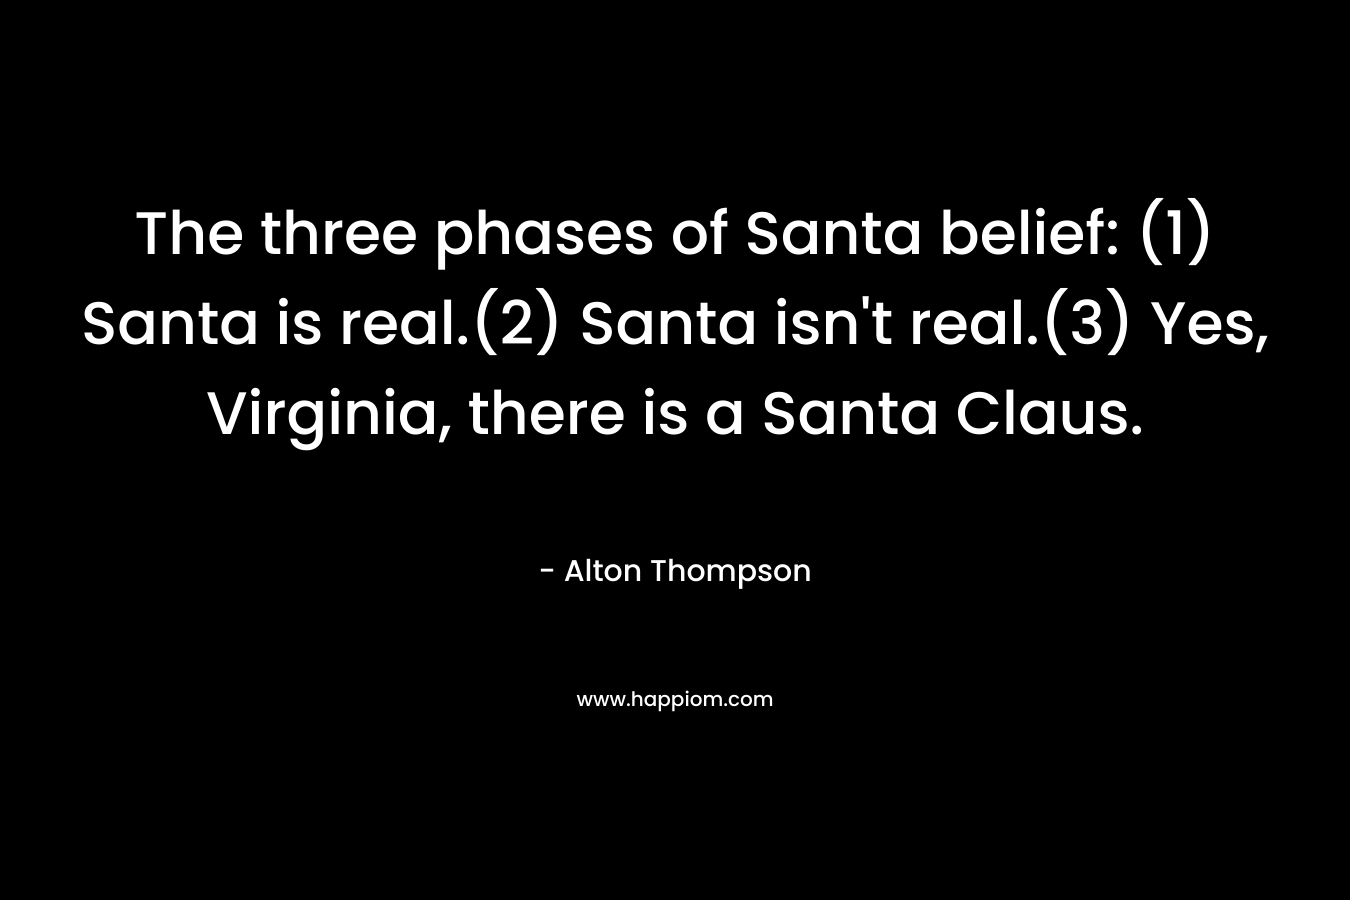 The three phases of Santa belief: (1) Santa is real.(2) Santa isn't real.(3) Yes, Virginia, there is a Santa Claus.